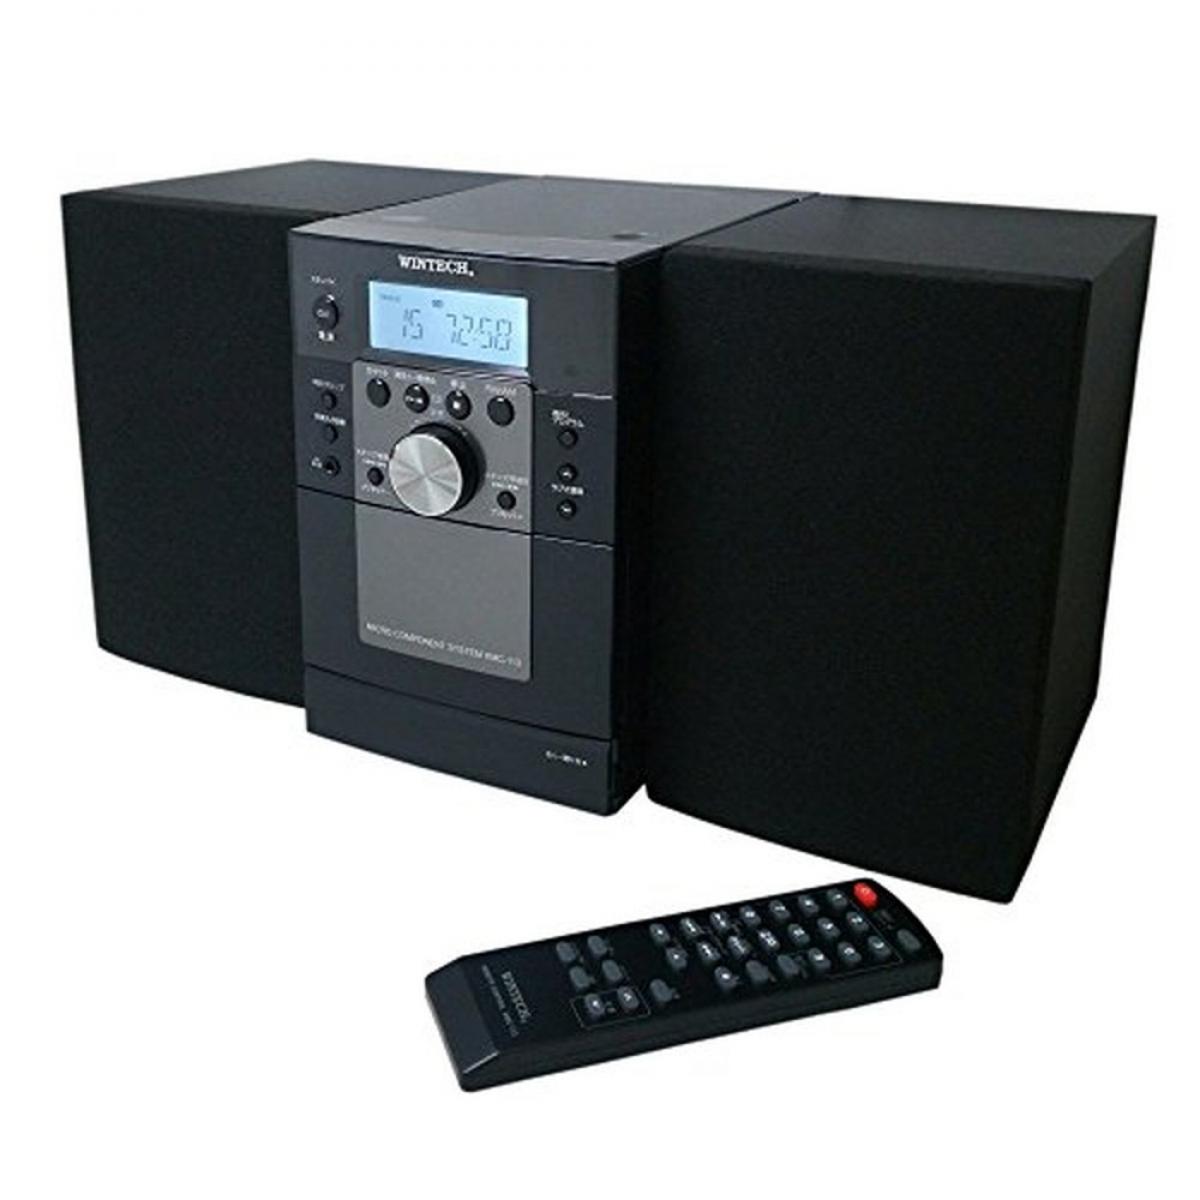 WINTECH AM/FMデジタルチューナー(FMワイドバンド対応)搭載CDカセットミニコンポ ブラック リモコン付属 KMC-113